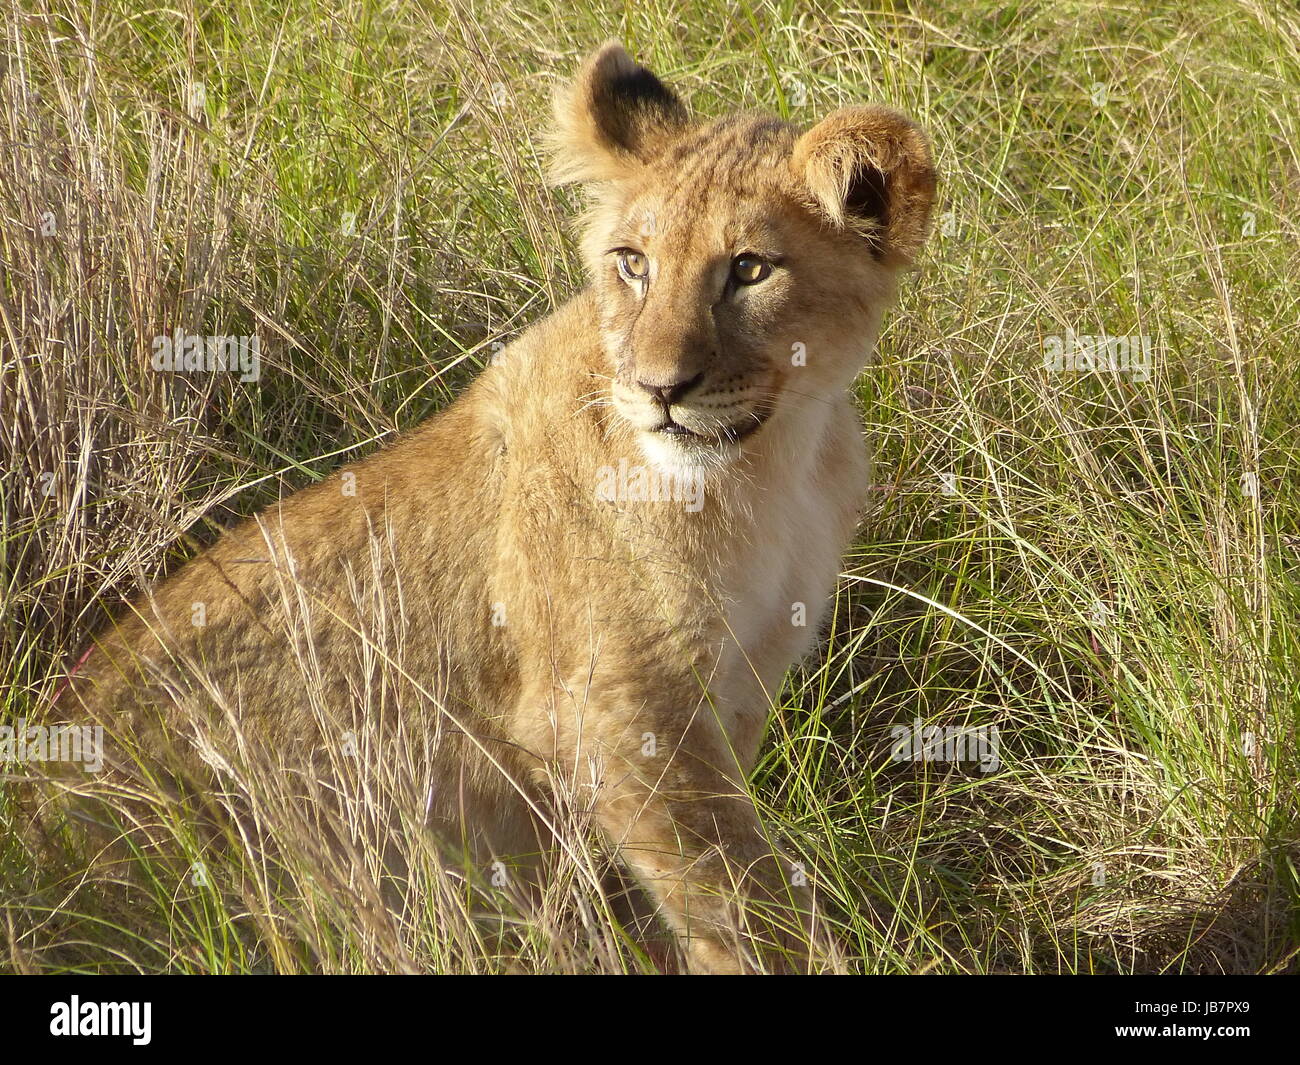 a lion child Stock Photo